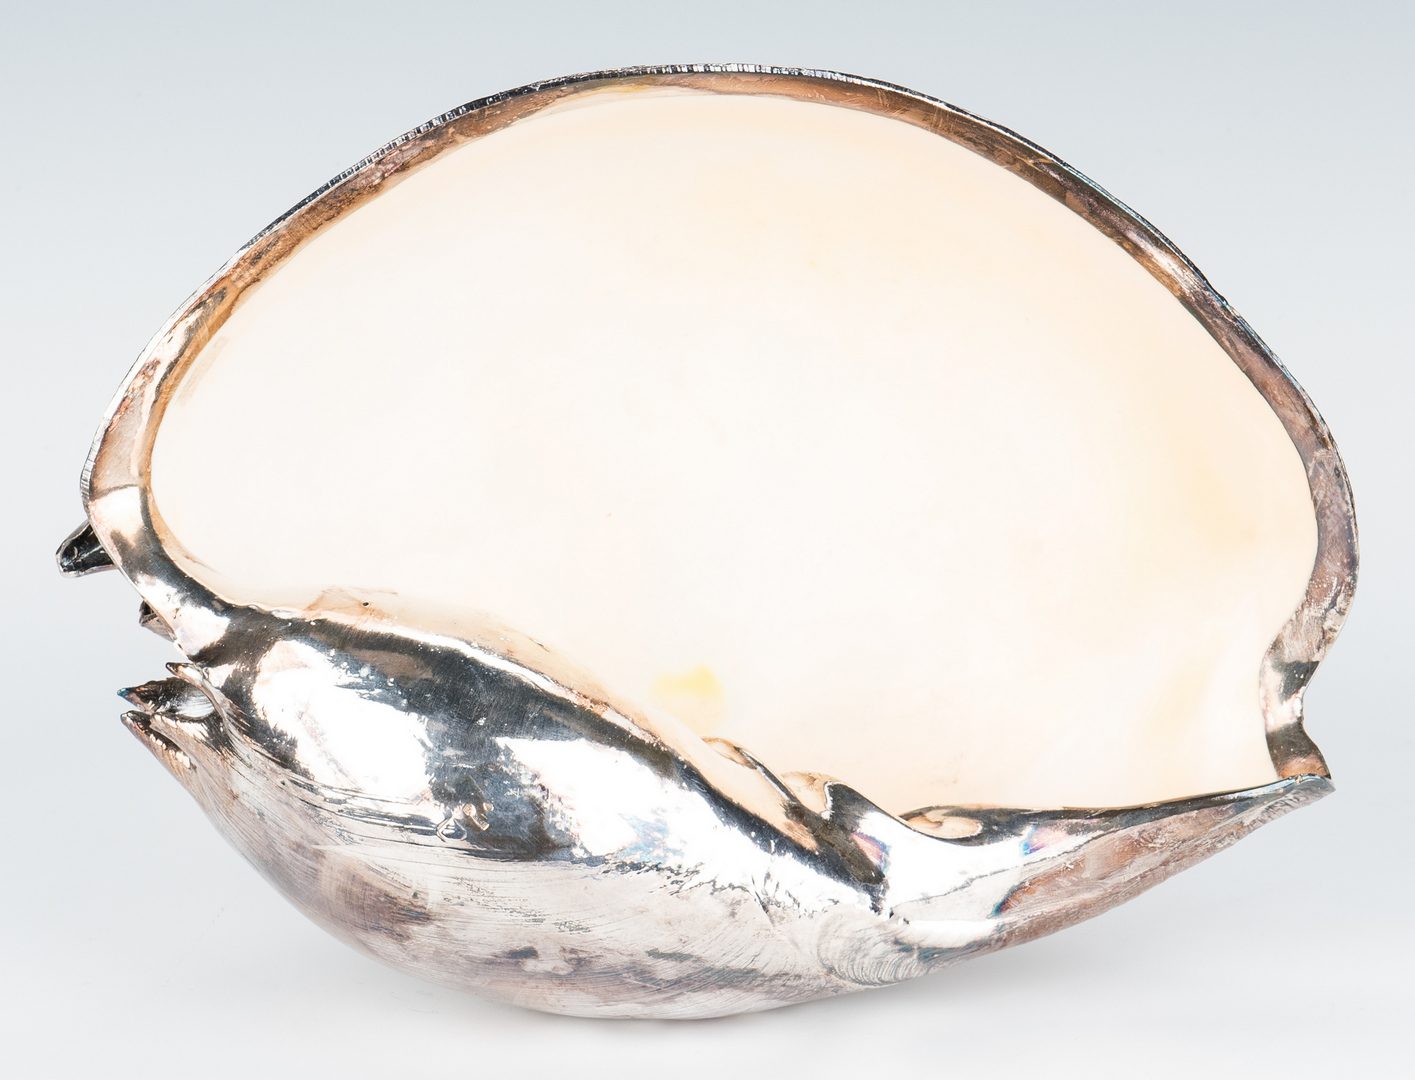 Lot 421: 7 Silver Clad Seashells, incl. Ruzzetti & Gow